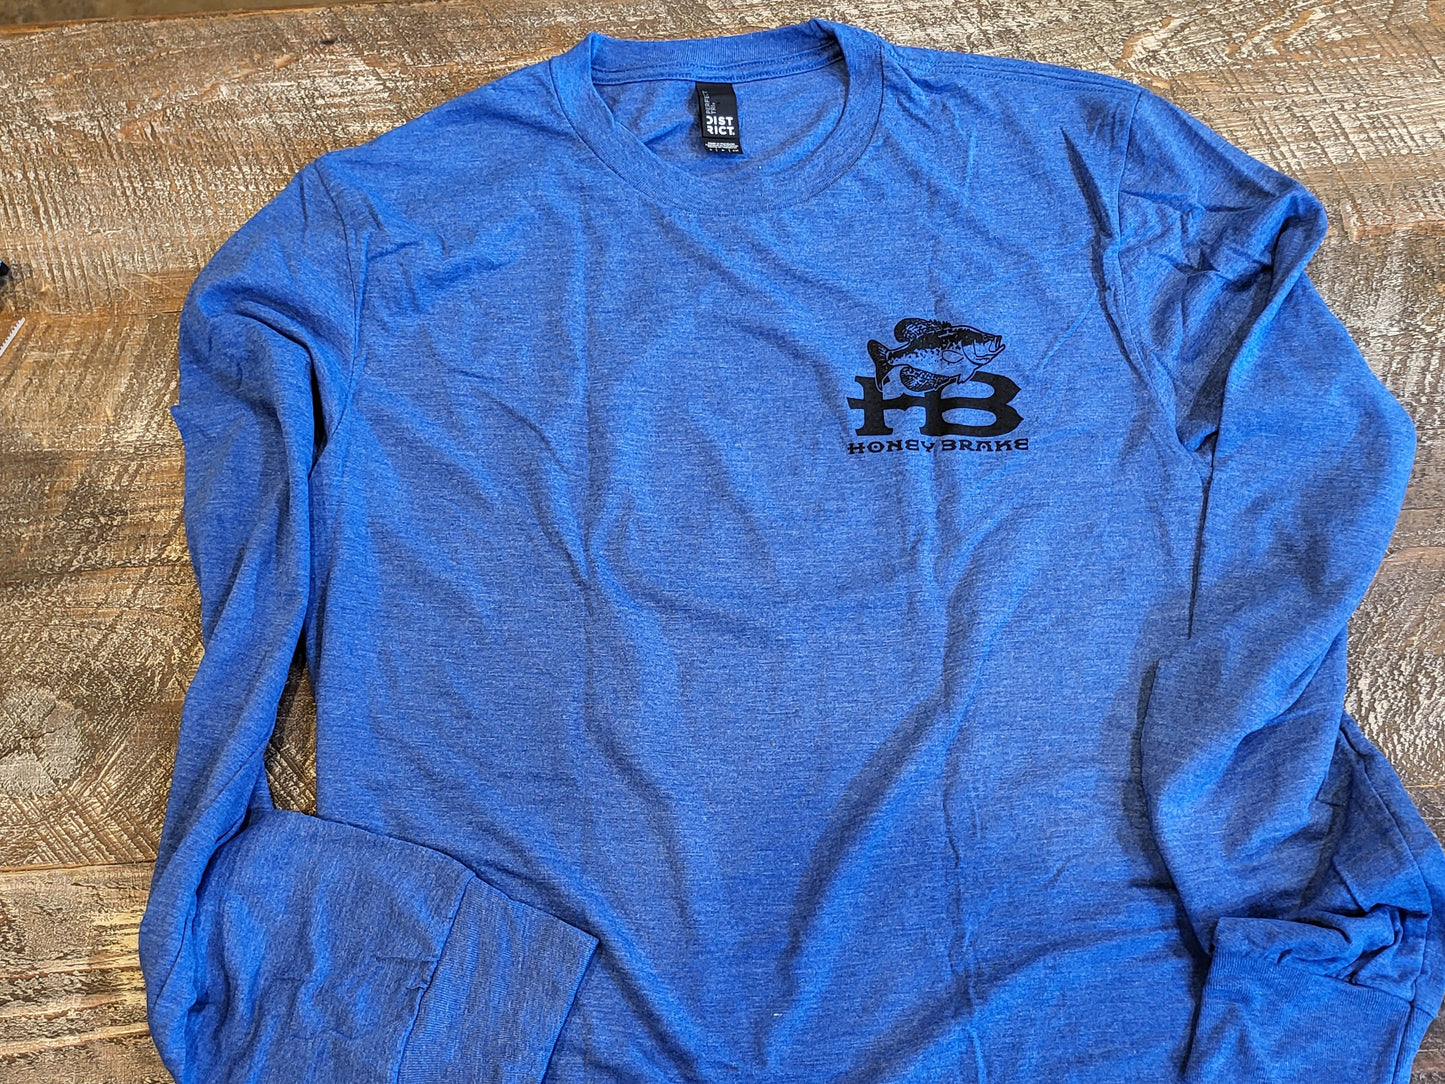 HB Sac-a-lait Long Sleeve T-shirt